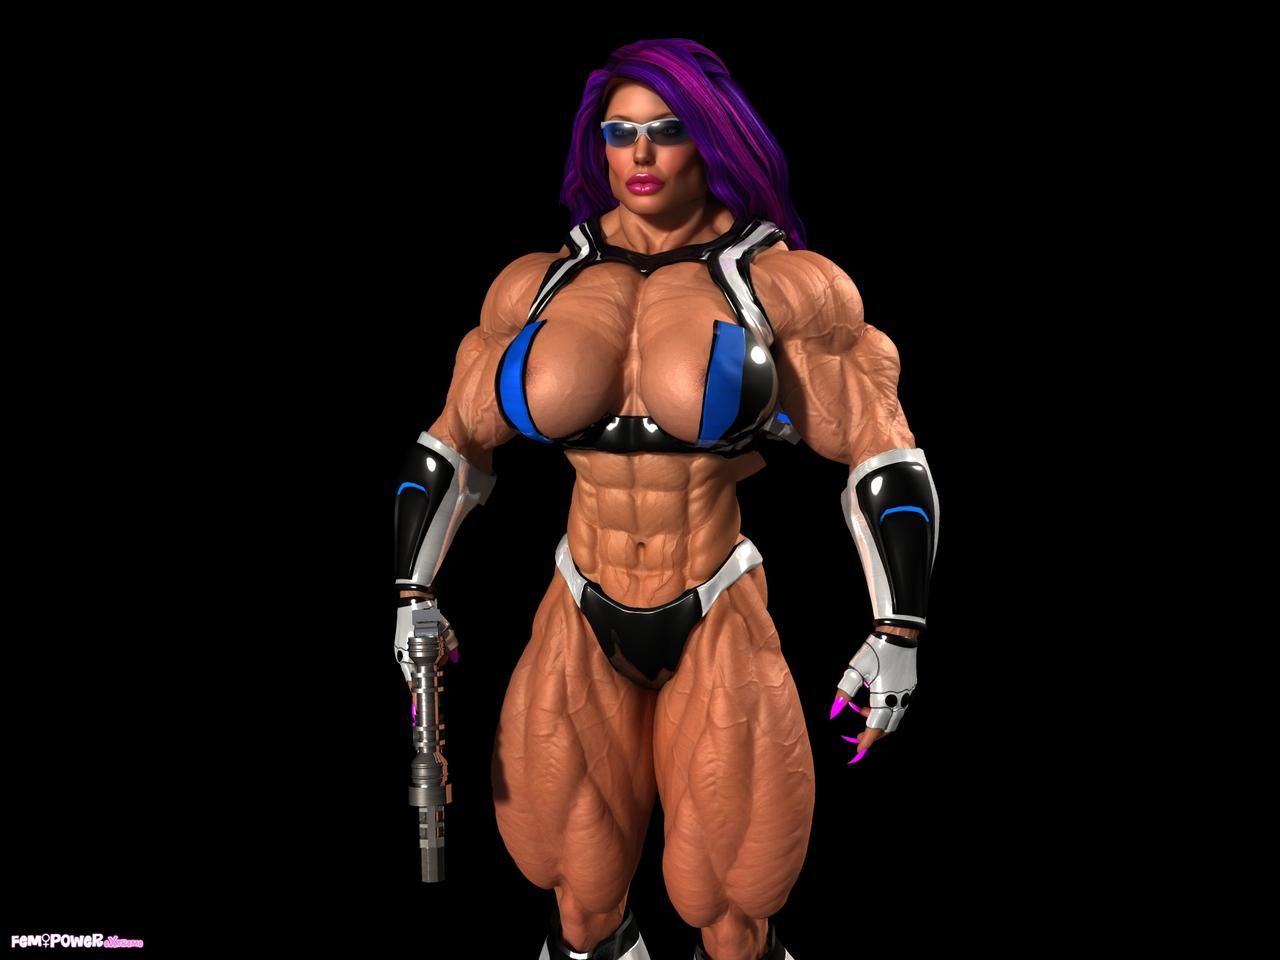 Muscle girls 3D models_ part 2 by Tigersan 188